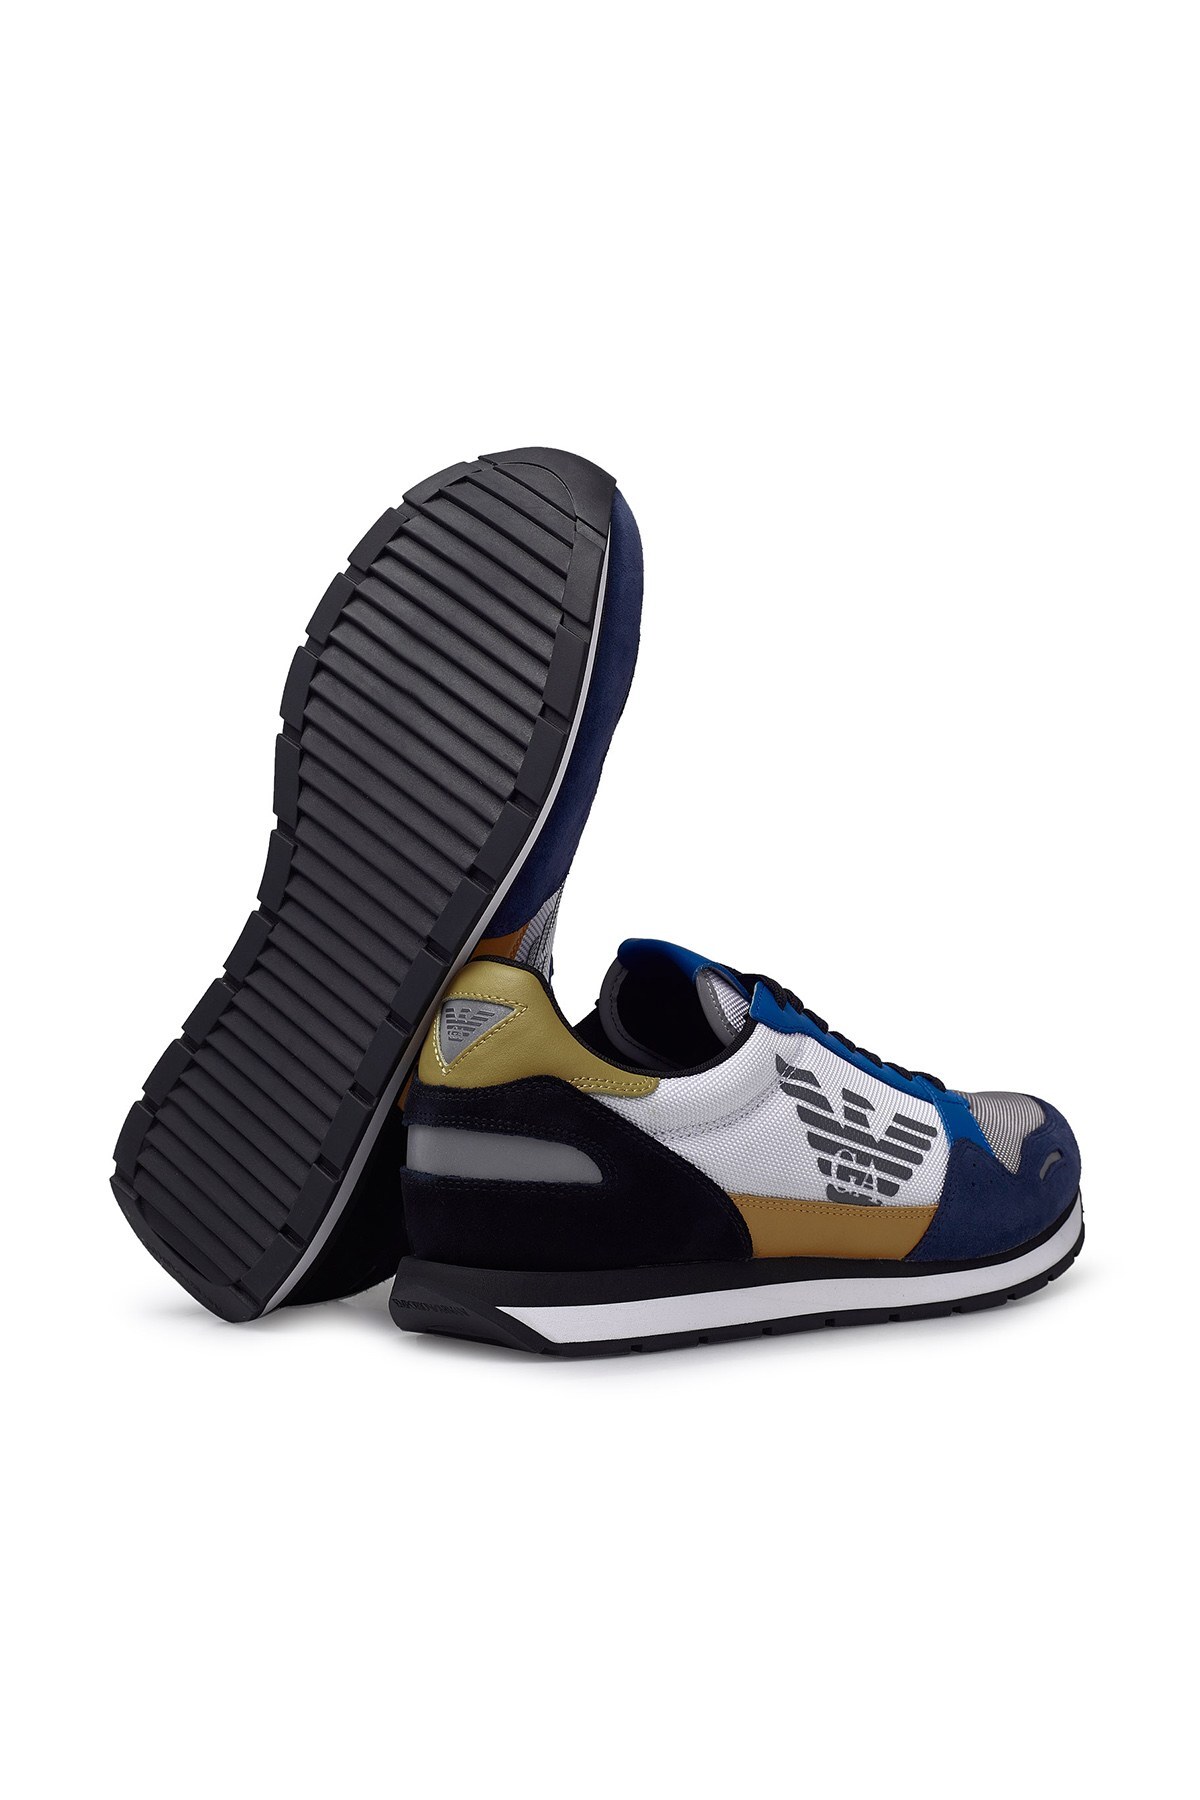 Emporio Armani Sneaker Erkek Ayakkabı X4X215 XM561 N235 SİYAH-MAVİ